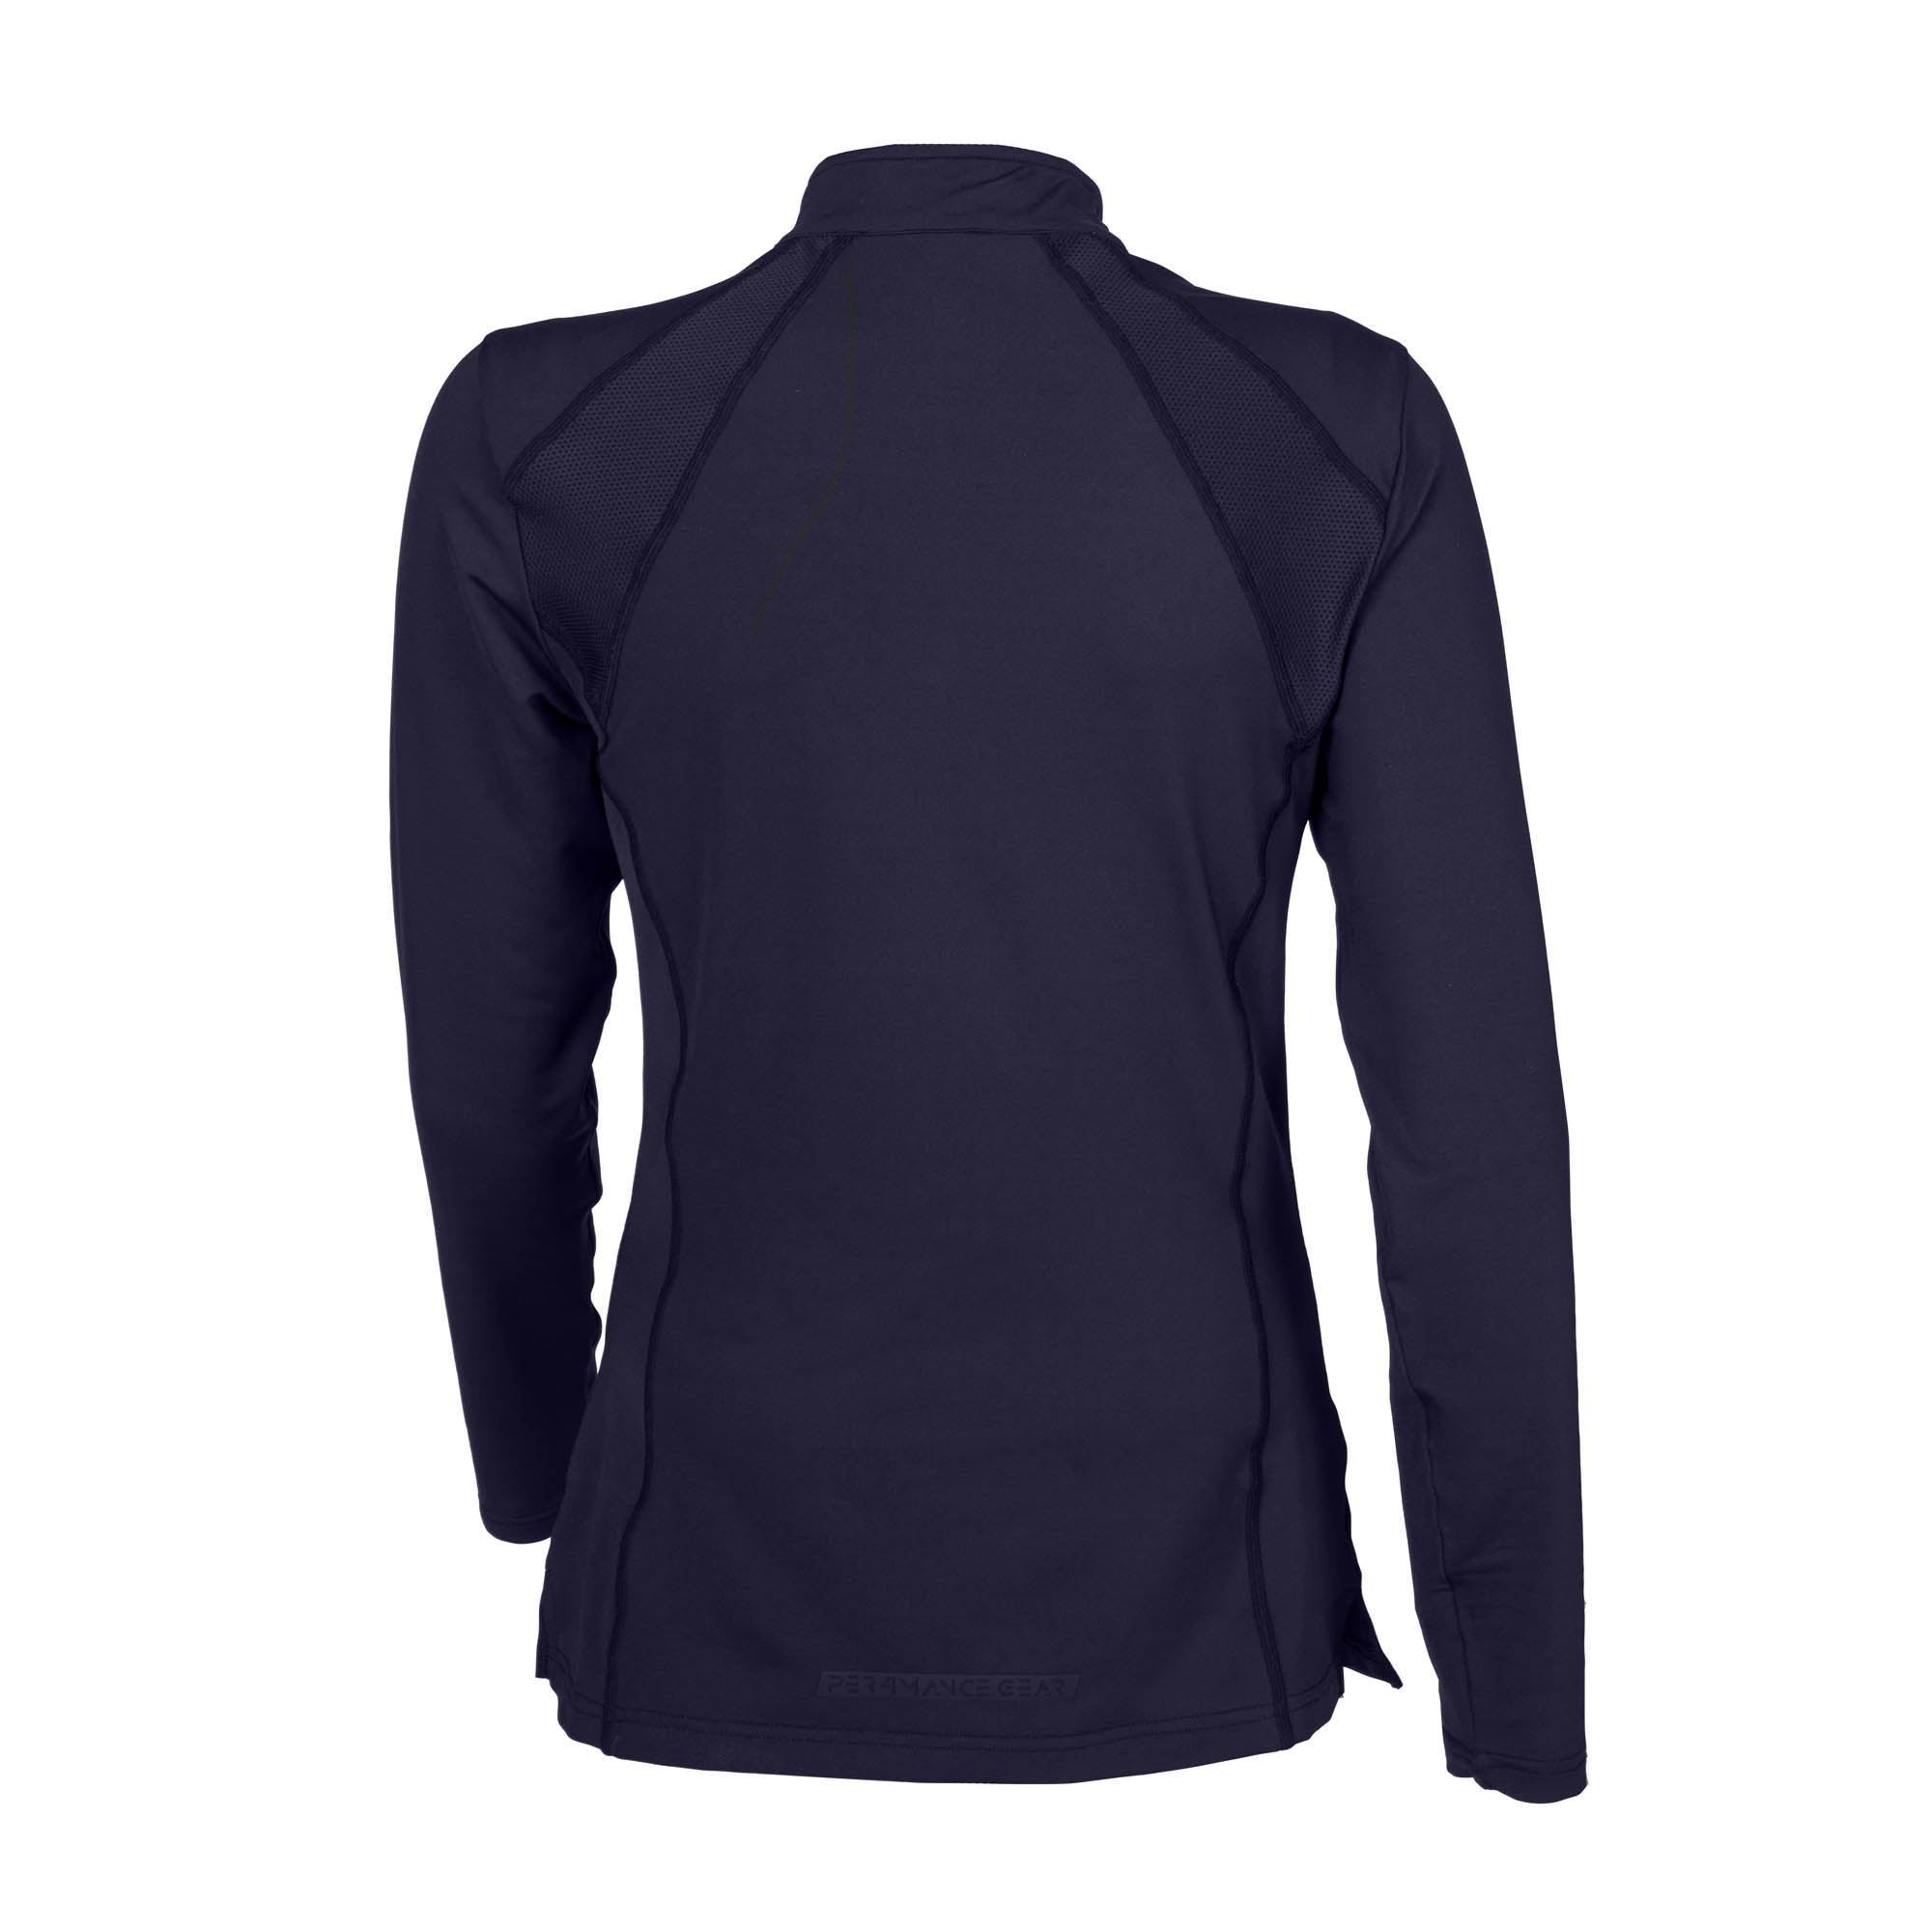 Odele Women's P4G Long Sleeve Shirt | Back on Track USA - Black / XS ...